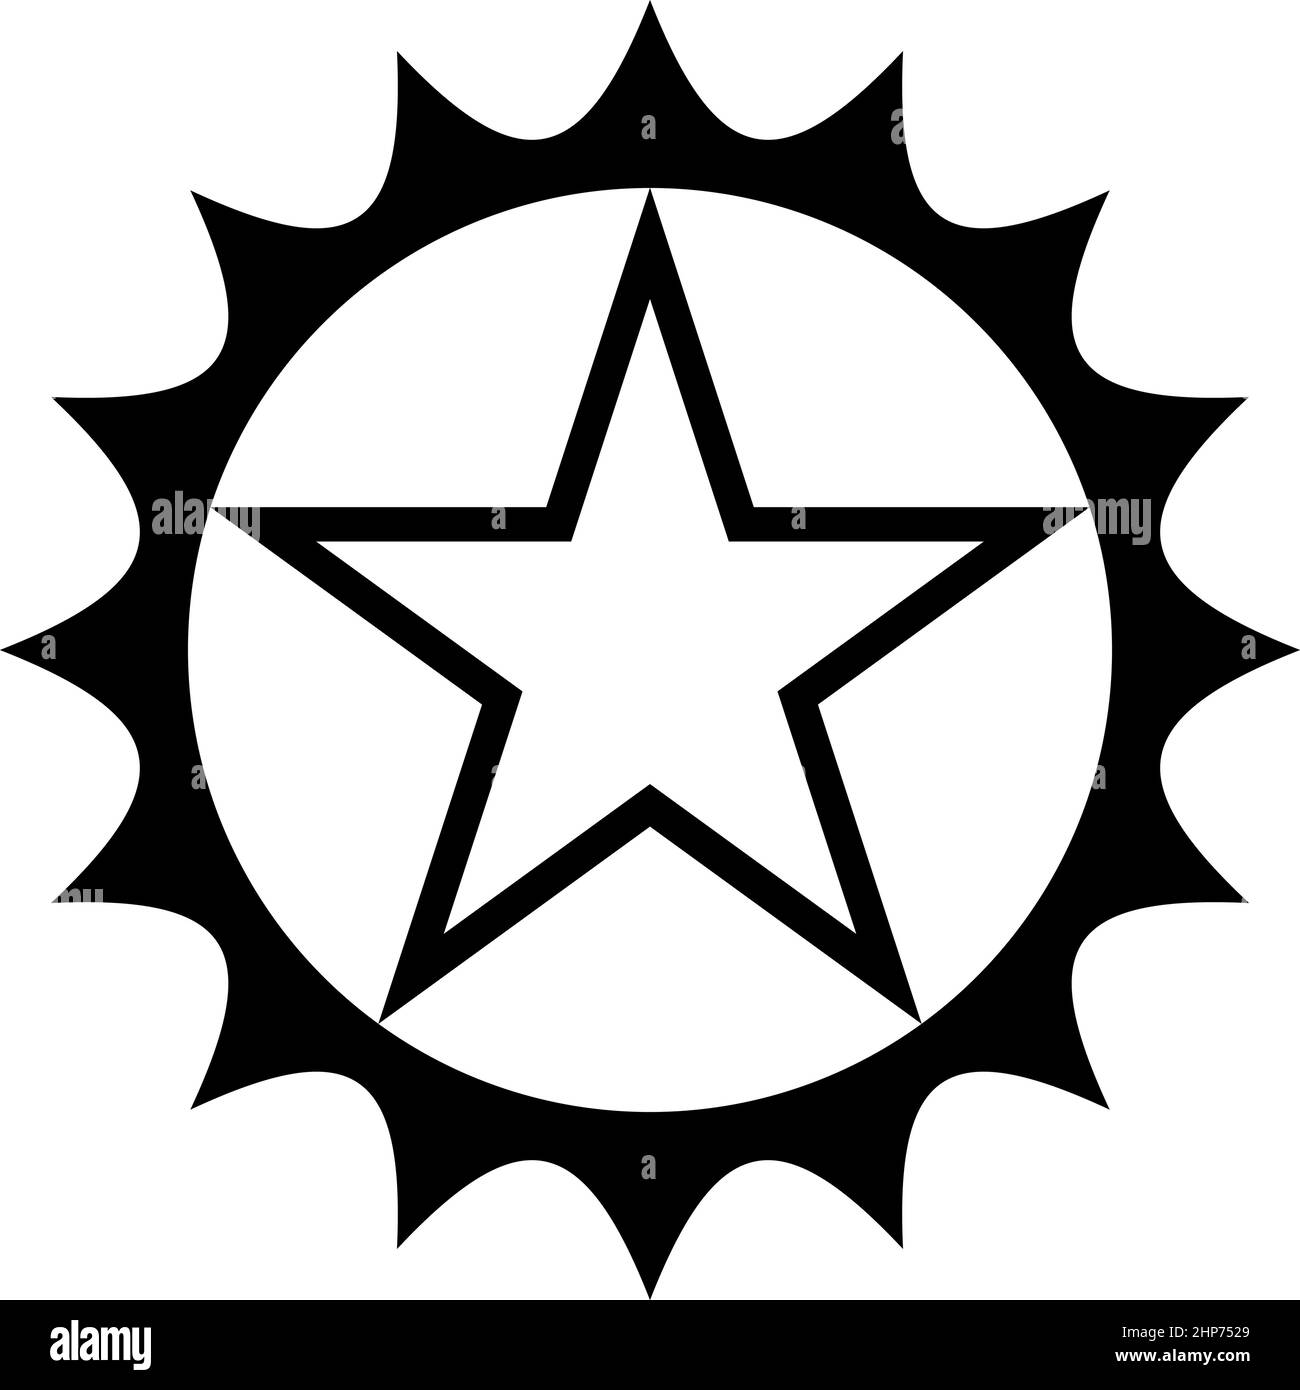 Stern im Kreis mit scharfen Kanten Symbol schwarze Farbe Vektor Illustration flache Stil Bild Stock Vektor